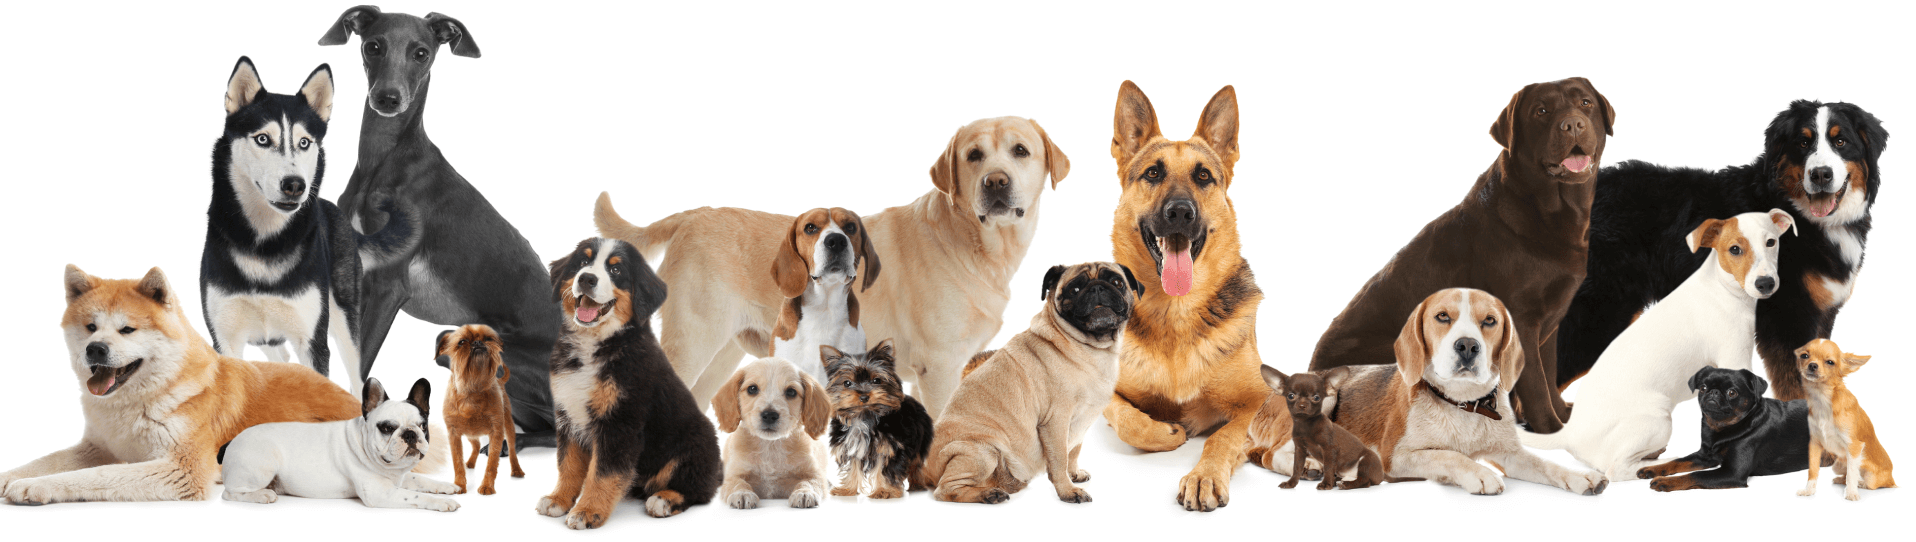 Mixture of dog breeds including Shiba Inu, French Bulldog, Bernese Mountain Dog, Labrador, Pug, German Shepherds, Pug, Beagle and Chihuahua